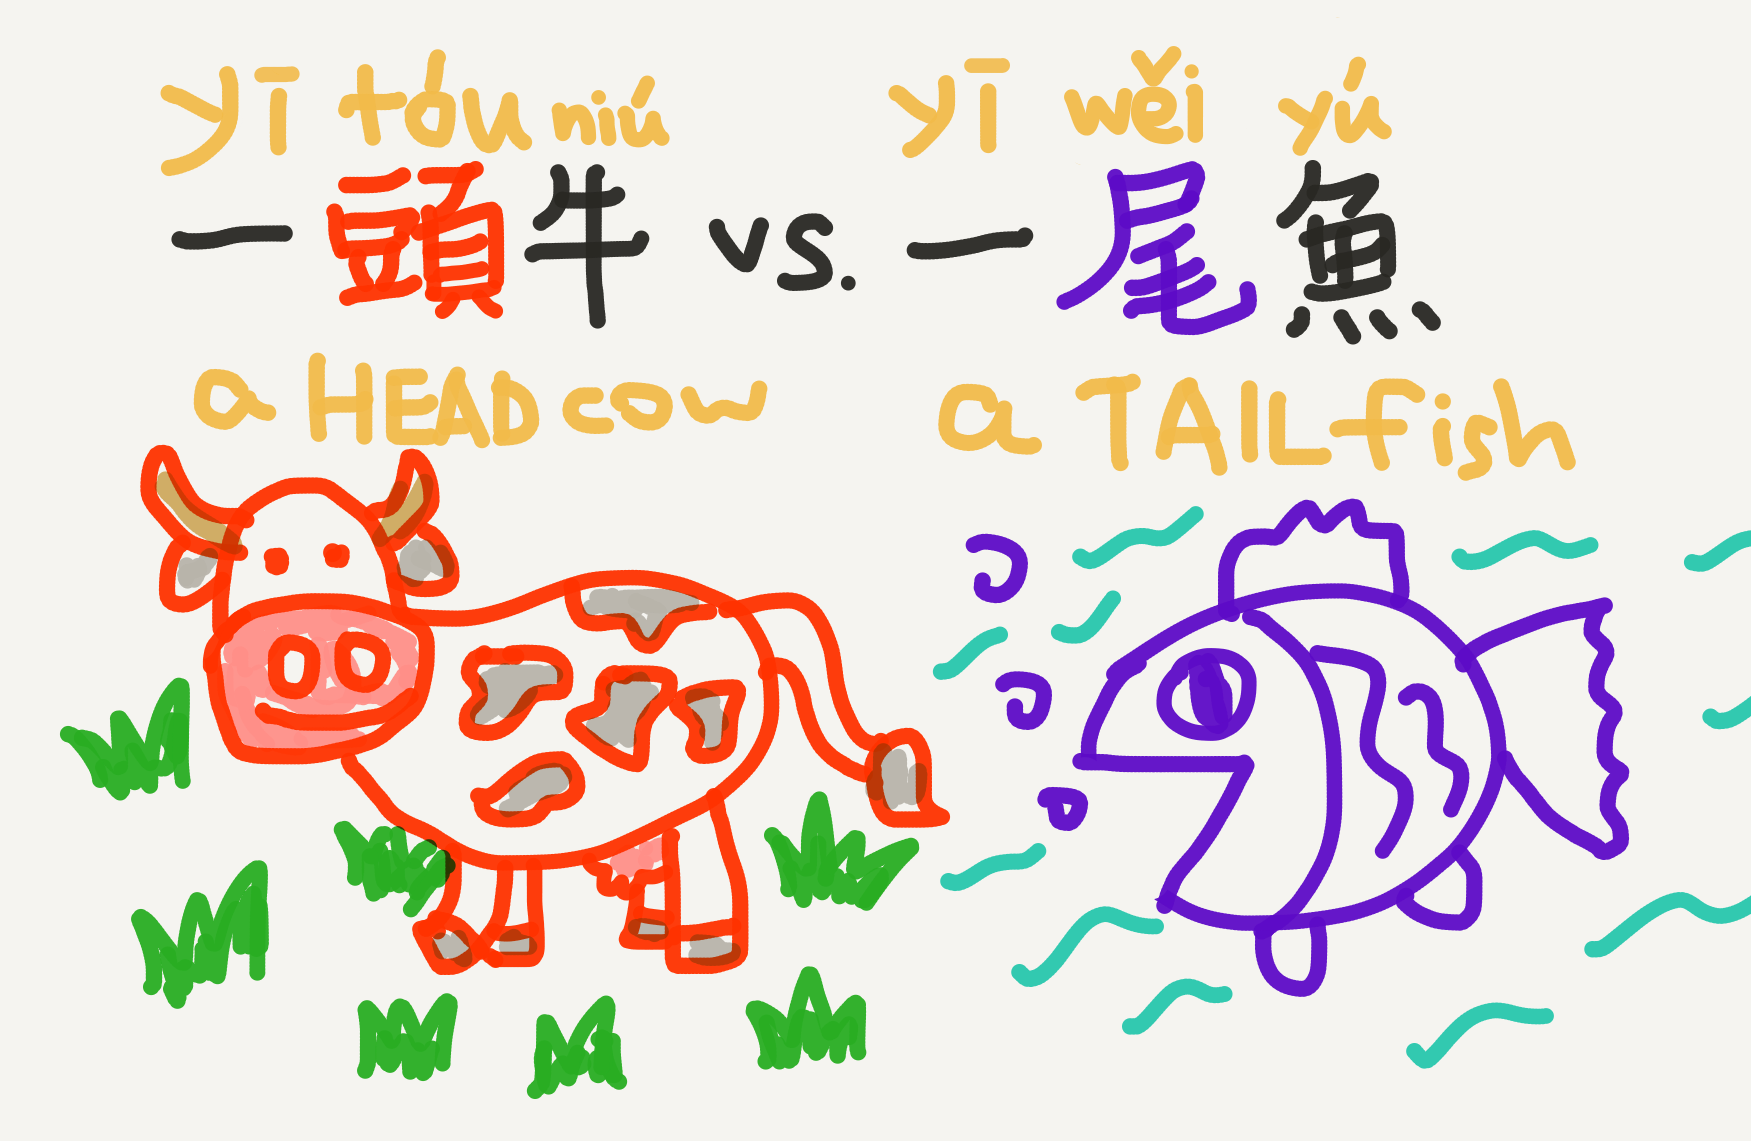 An illustration of noun classification in Mandarin Chinese.